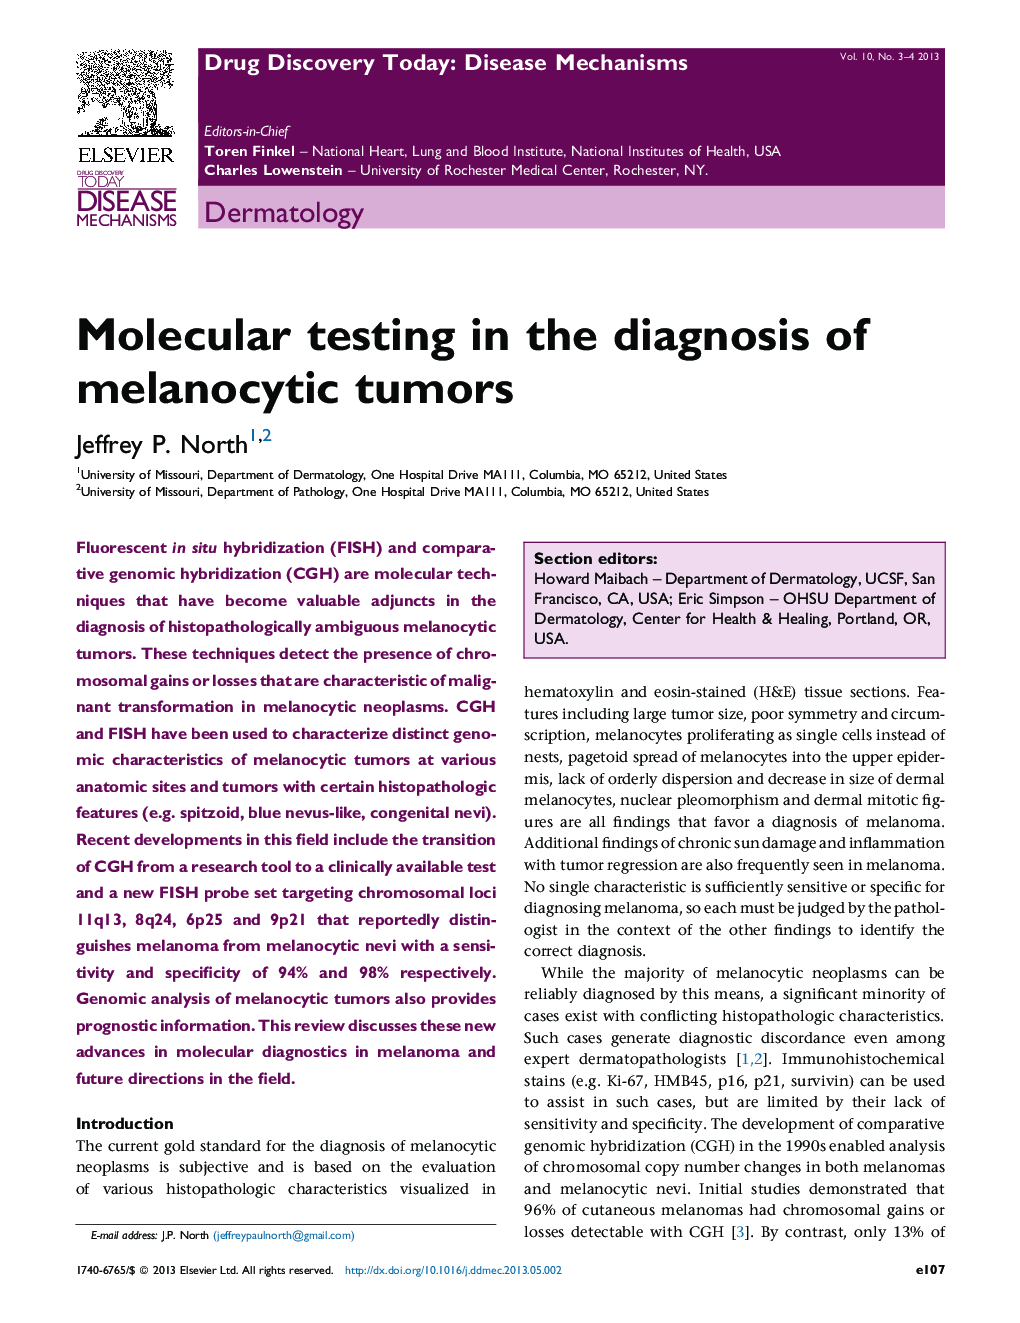 Molecular testing in the diagnosis of melanocytic tumors